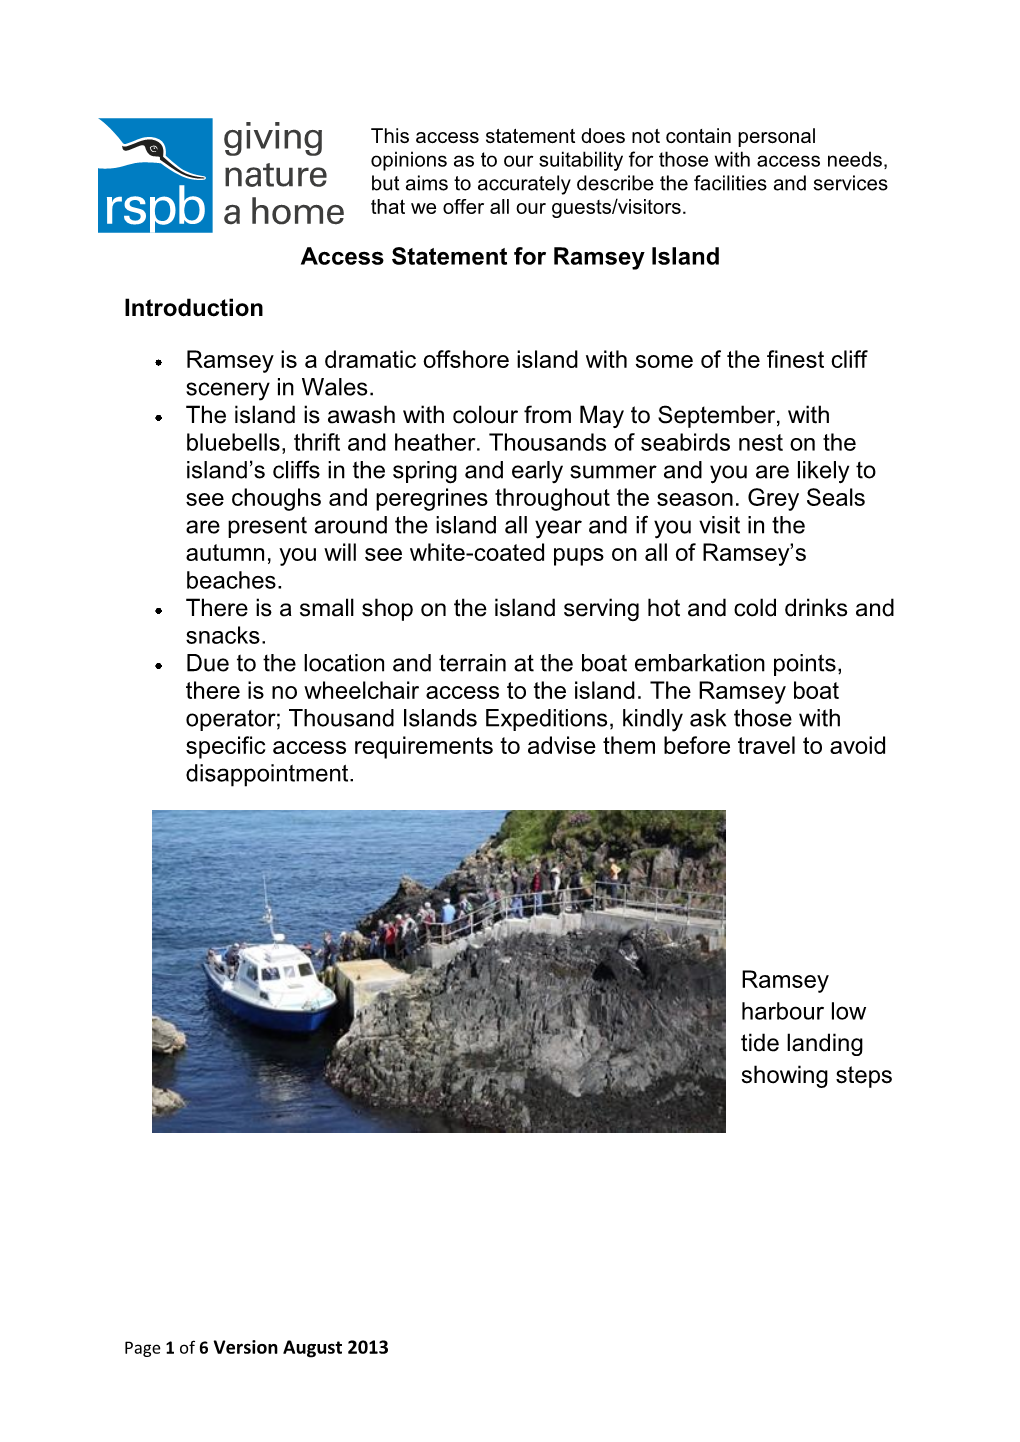 Ramsey Island Access Statement